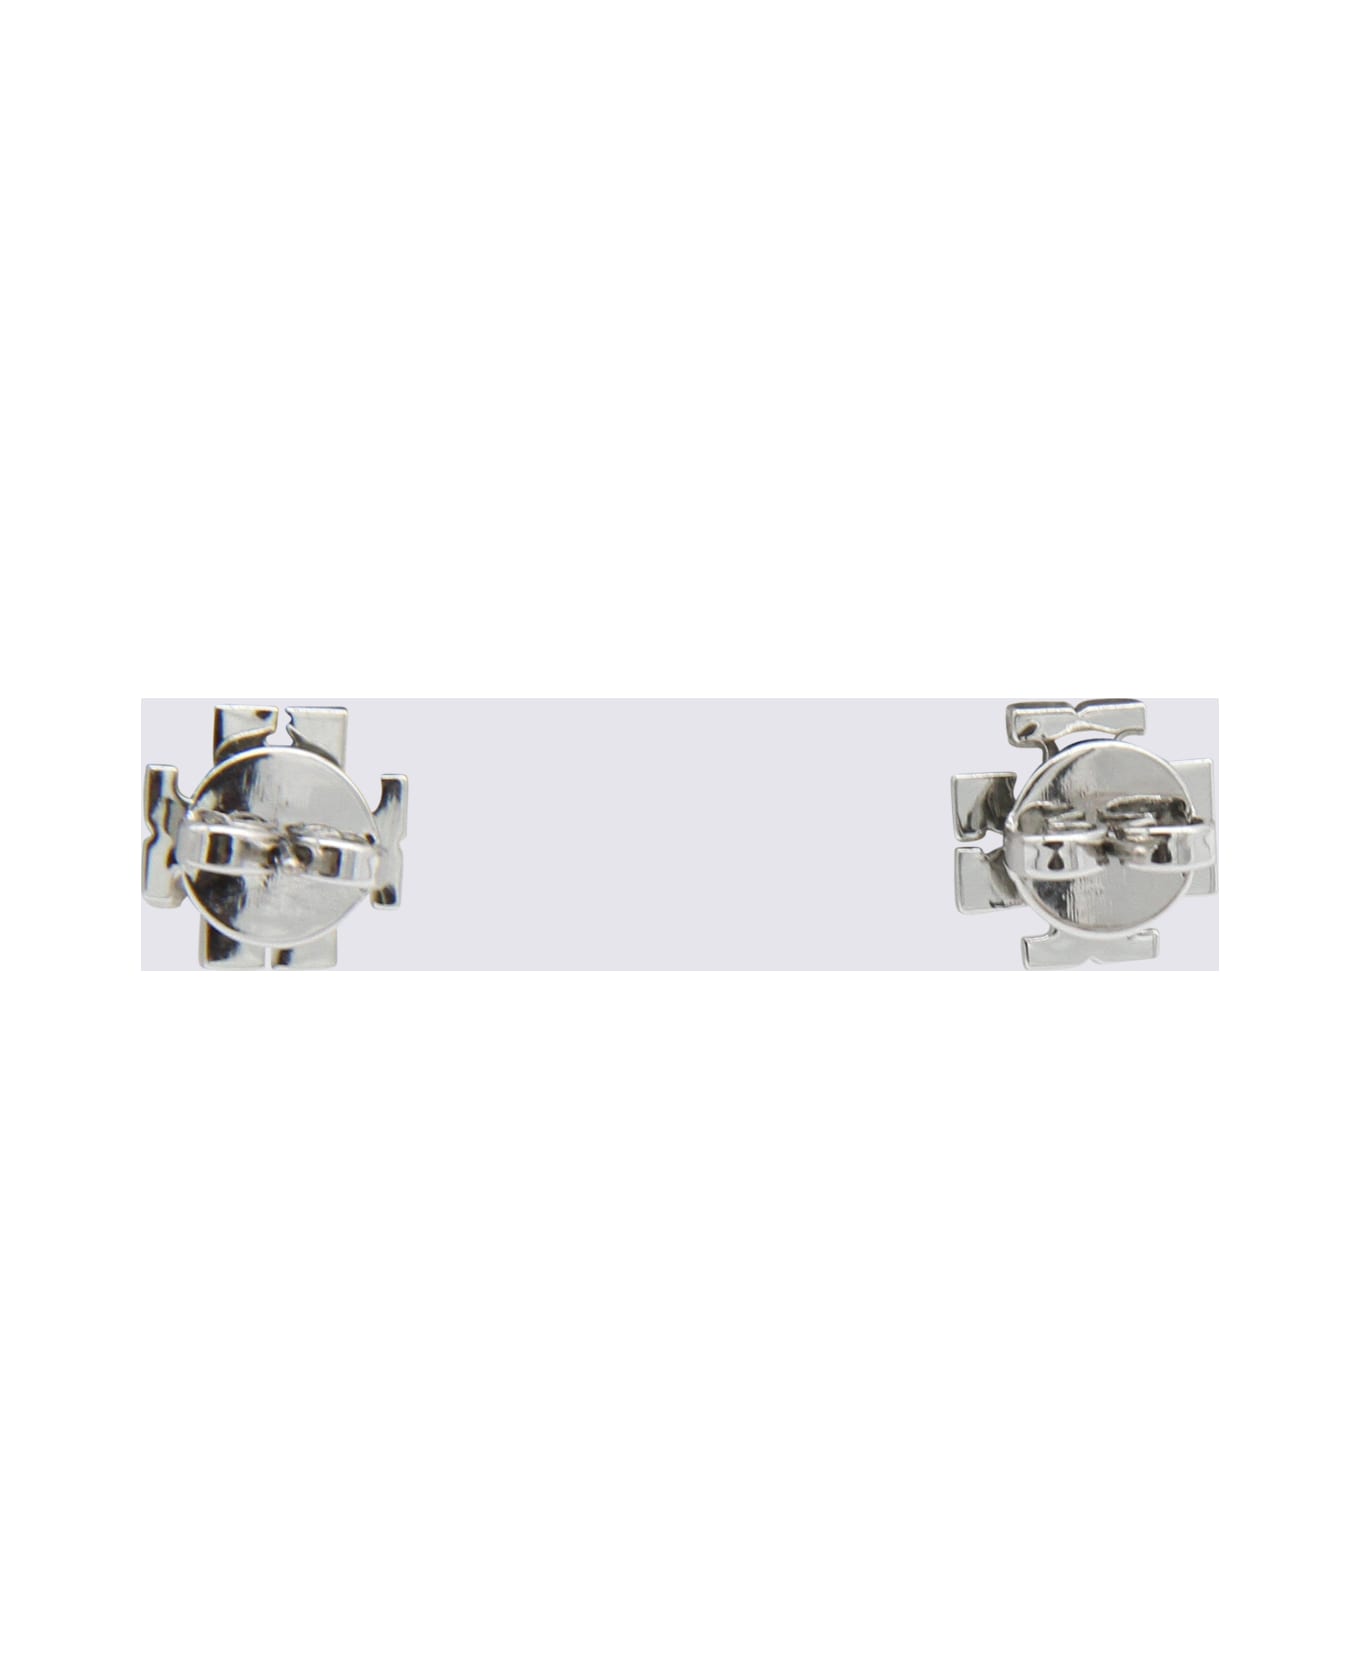 Tory Burch Silver Tone Metal Earrings - Silver